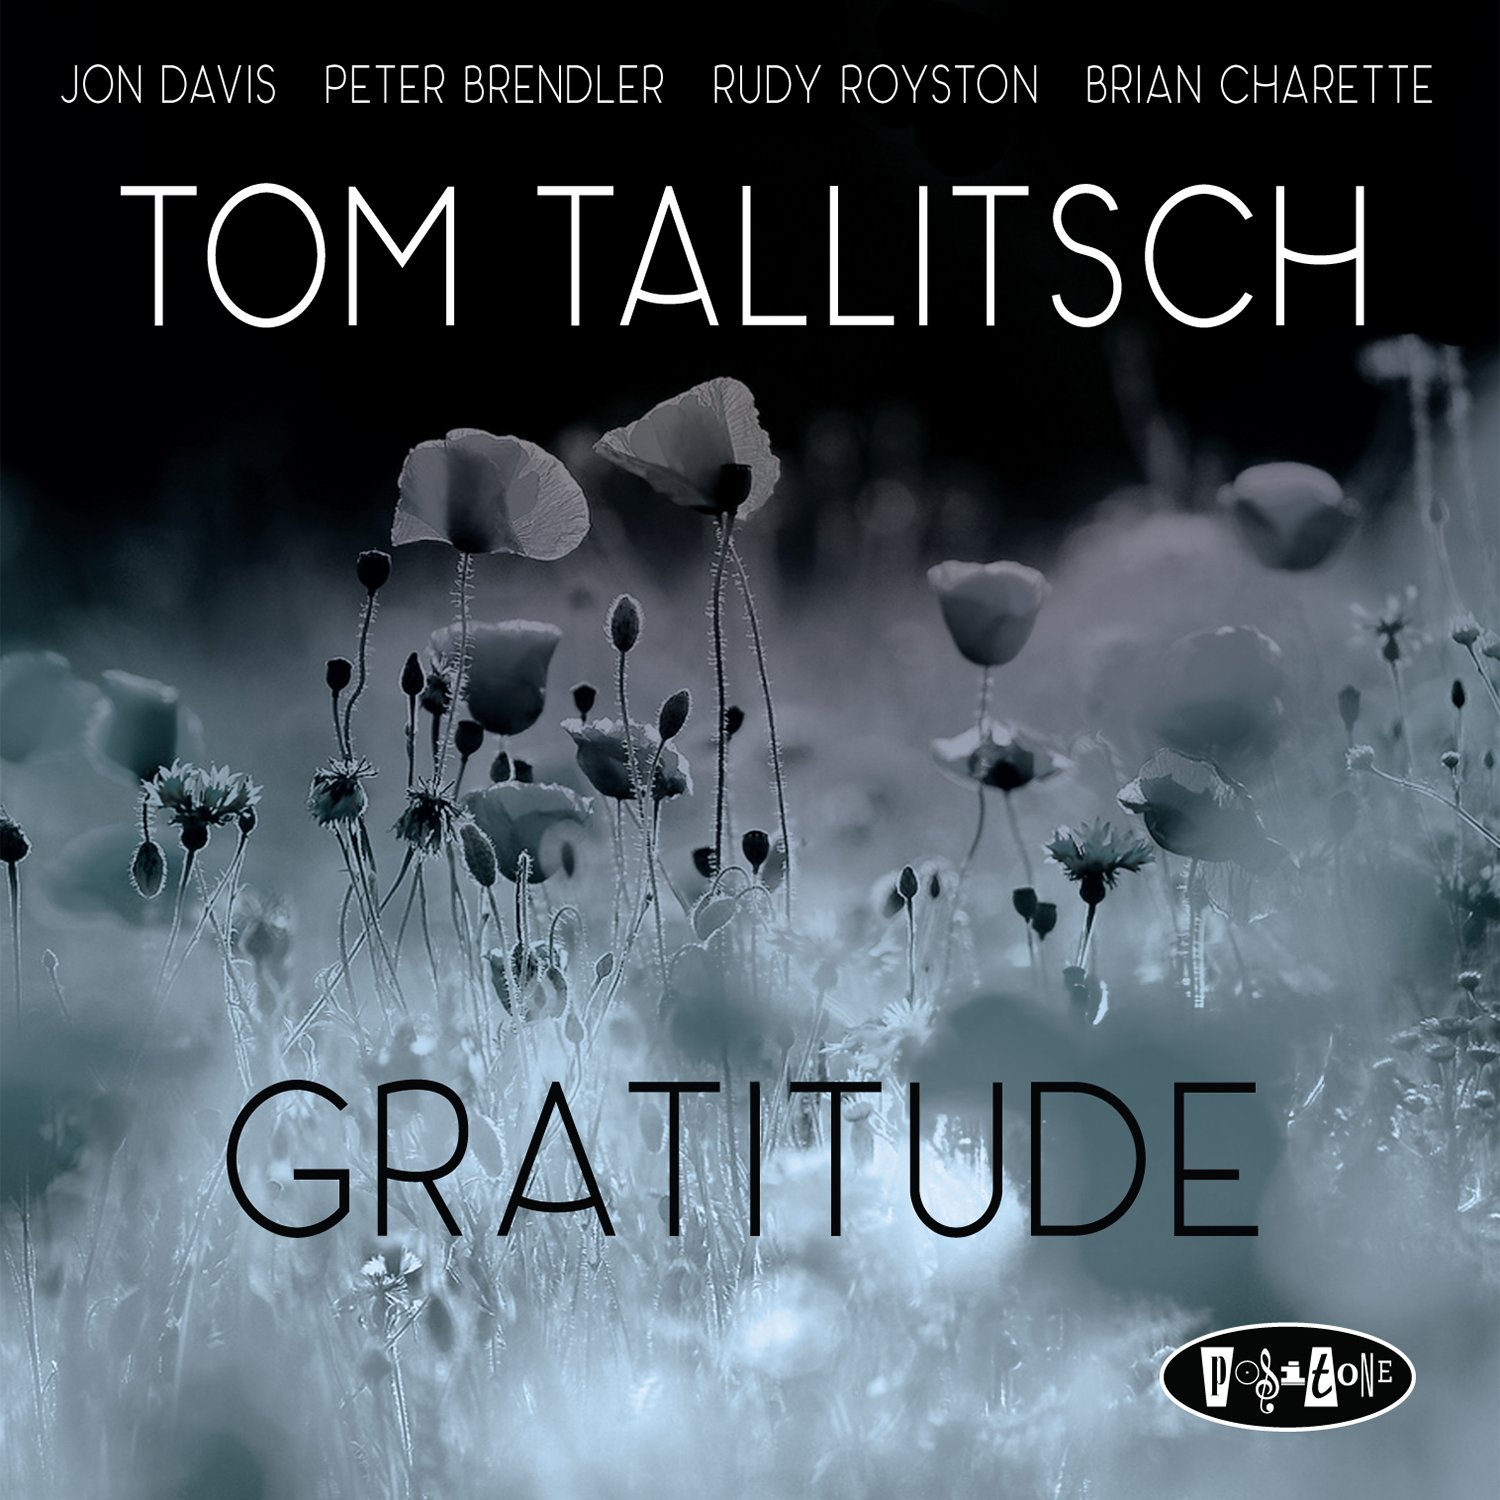 Günün Albümü: Tom Tallitsch "Gratitude" (2016)